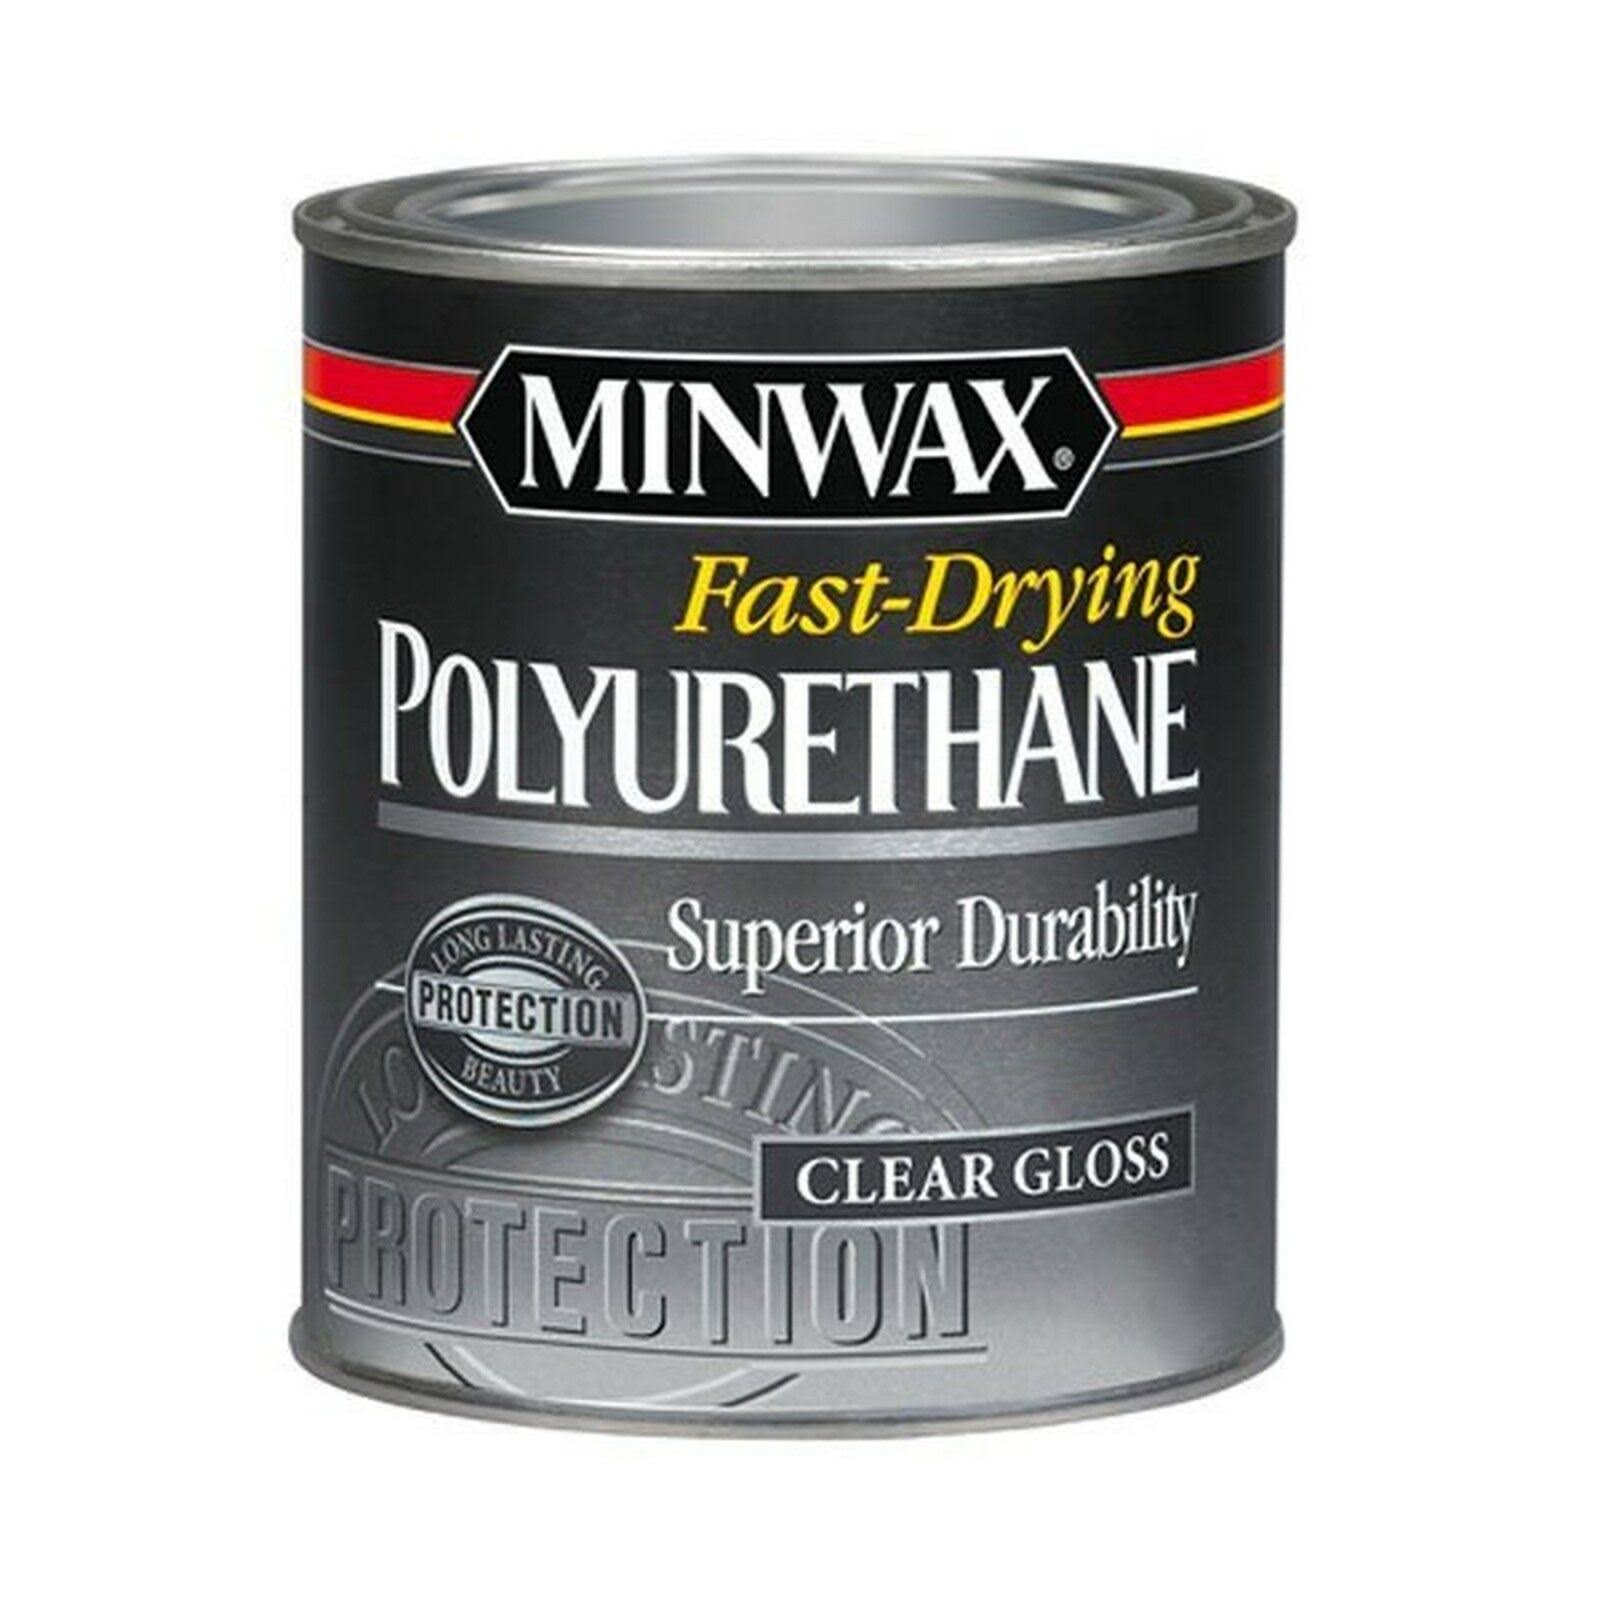 Minwax Fast-Drying Polyurethane - Clear Gloss